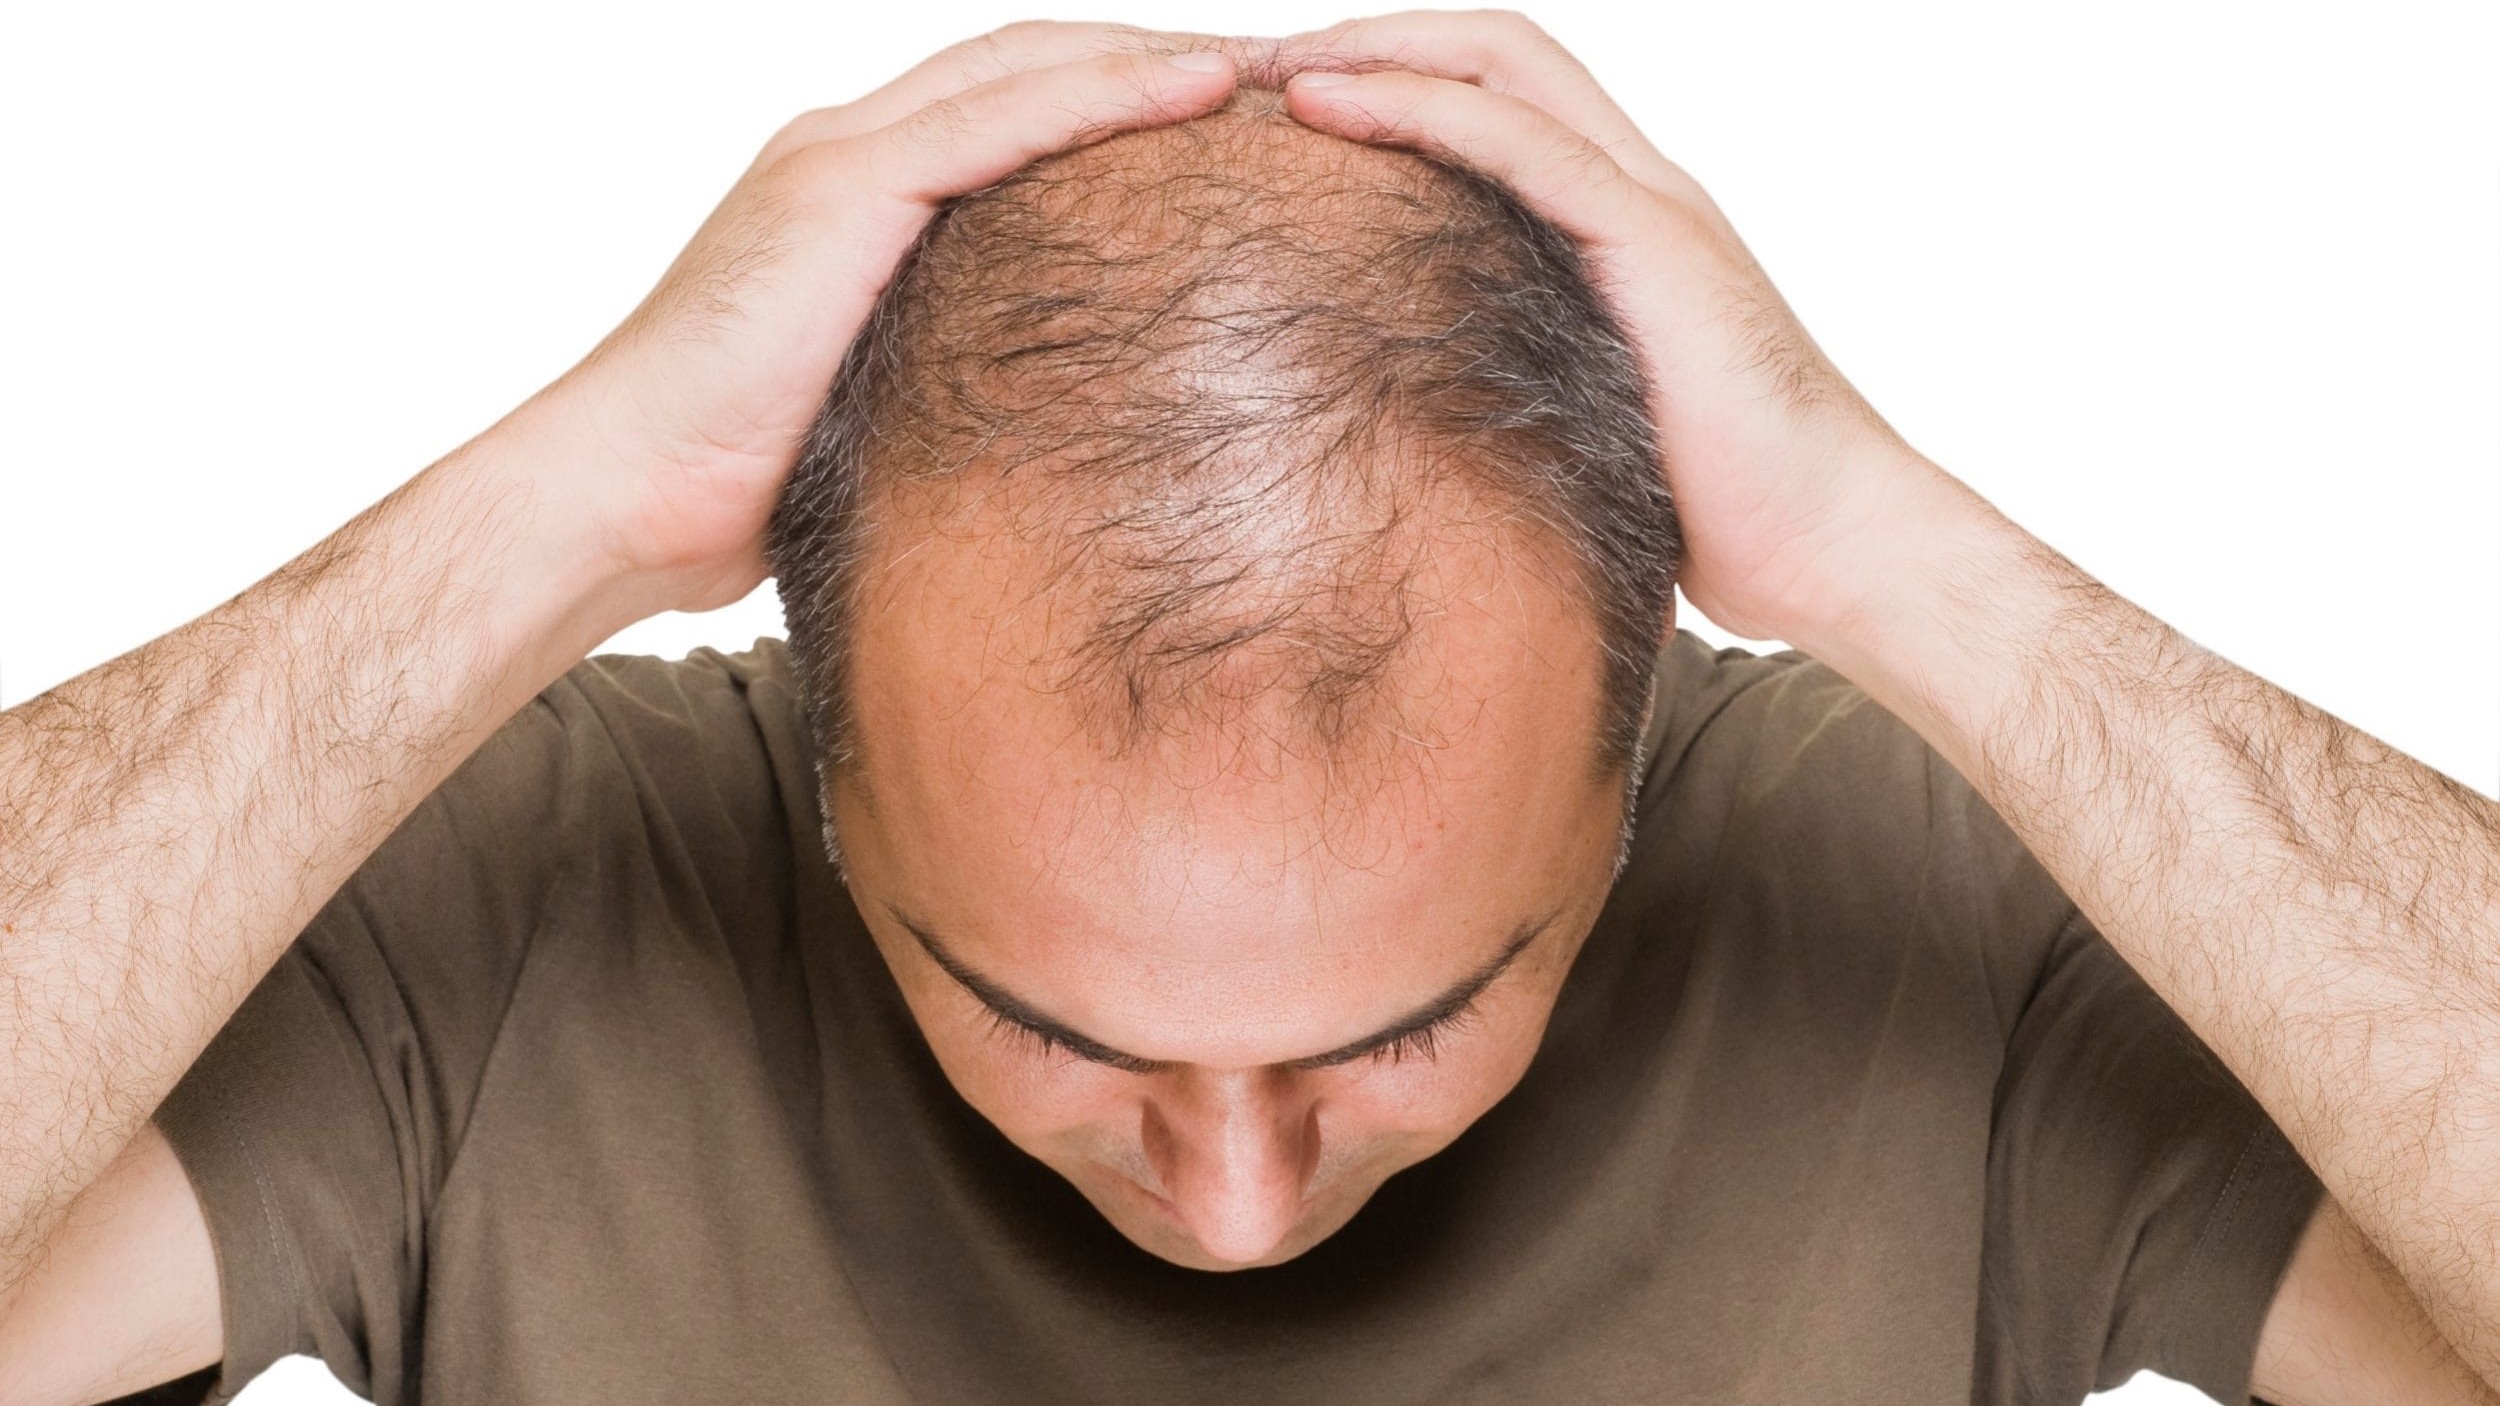 Hair Loss Treatment and Struggles